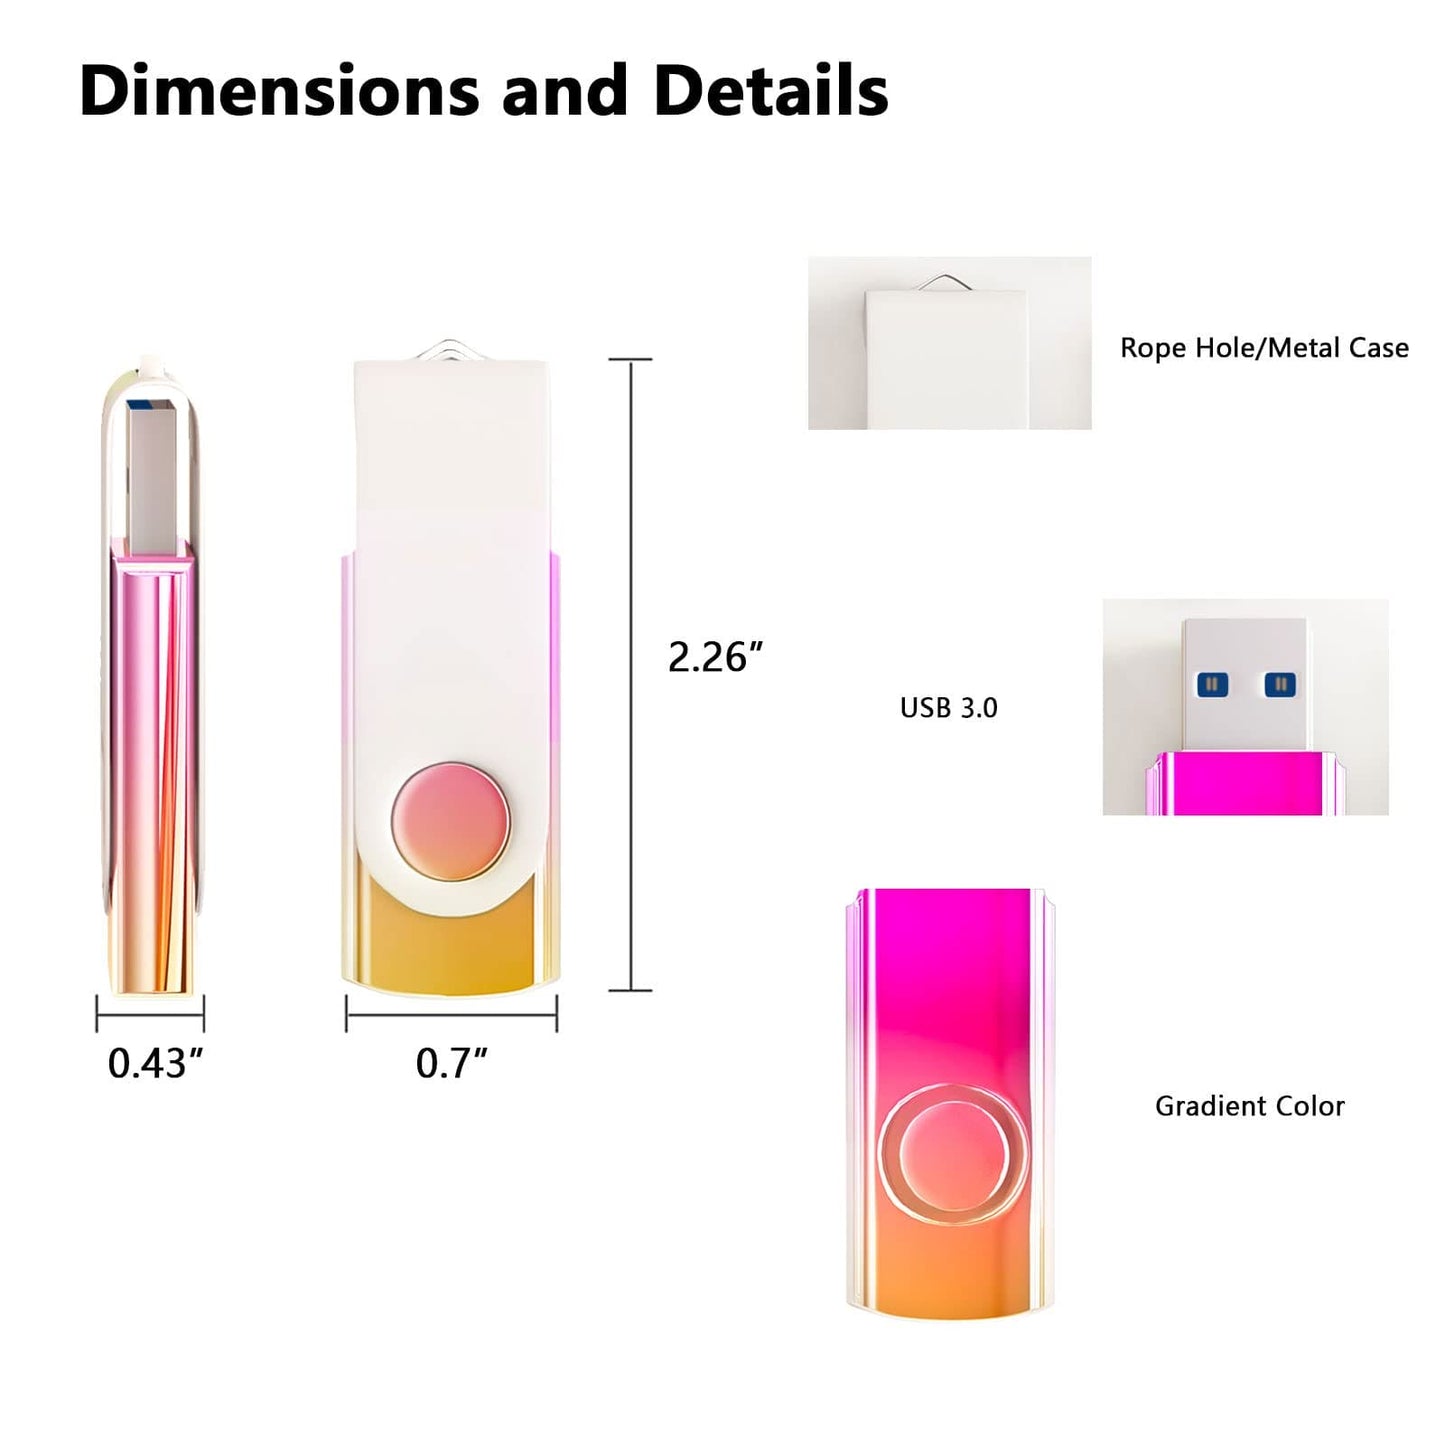 2 Pieces 64GB USB 3.0 Memory Sticks Gradient Color USB Flash Drives Wholesale Bulk Swivel Design Thumb Drive for Data Storage (Golden Pink + Black Silver)